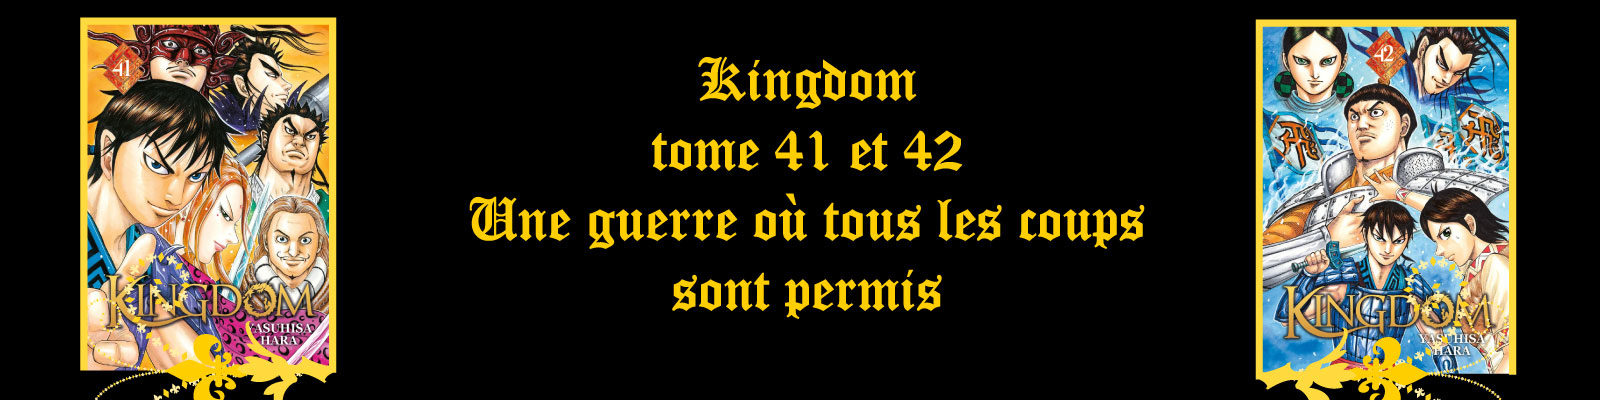 Kingdom-4142